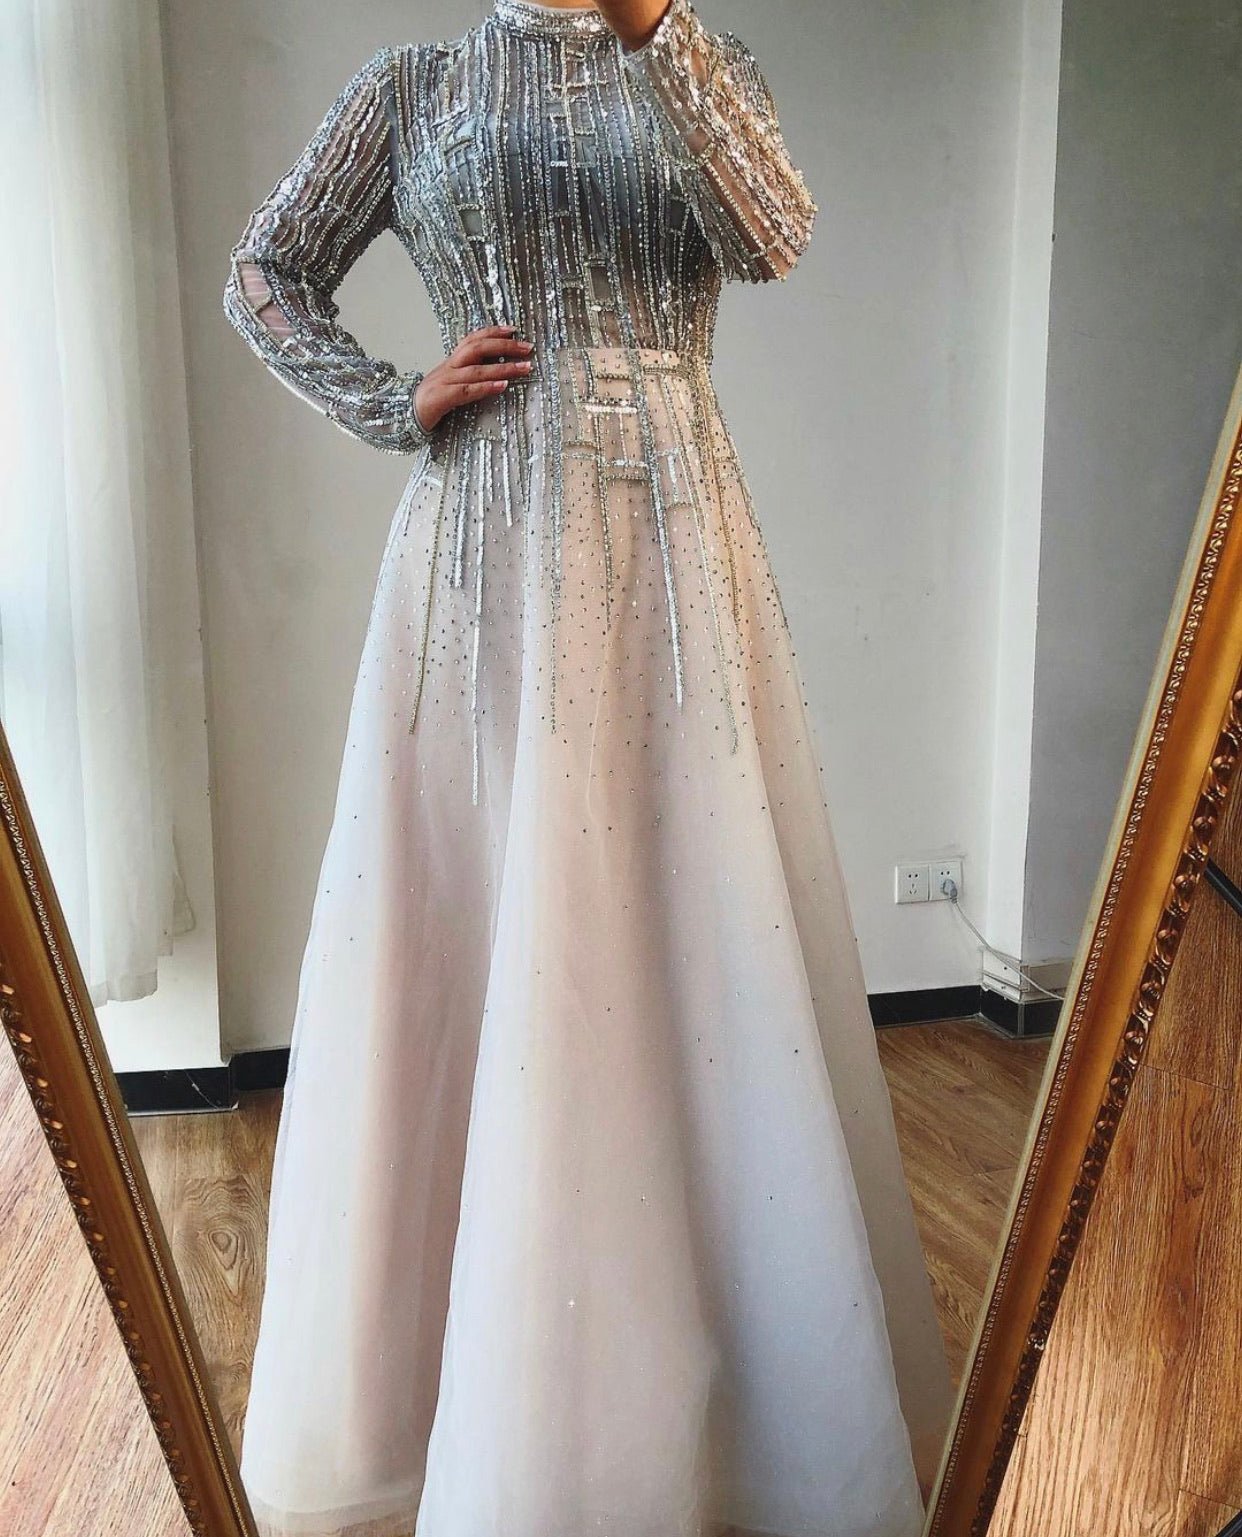 Priscilla Long Sleeves Beading Embellished Formal Dress - Mscooco.co.uk